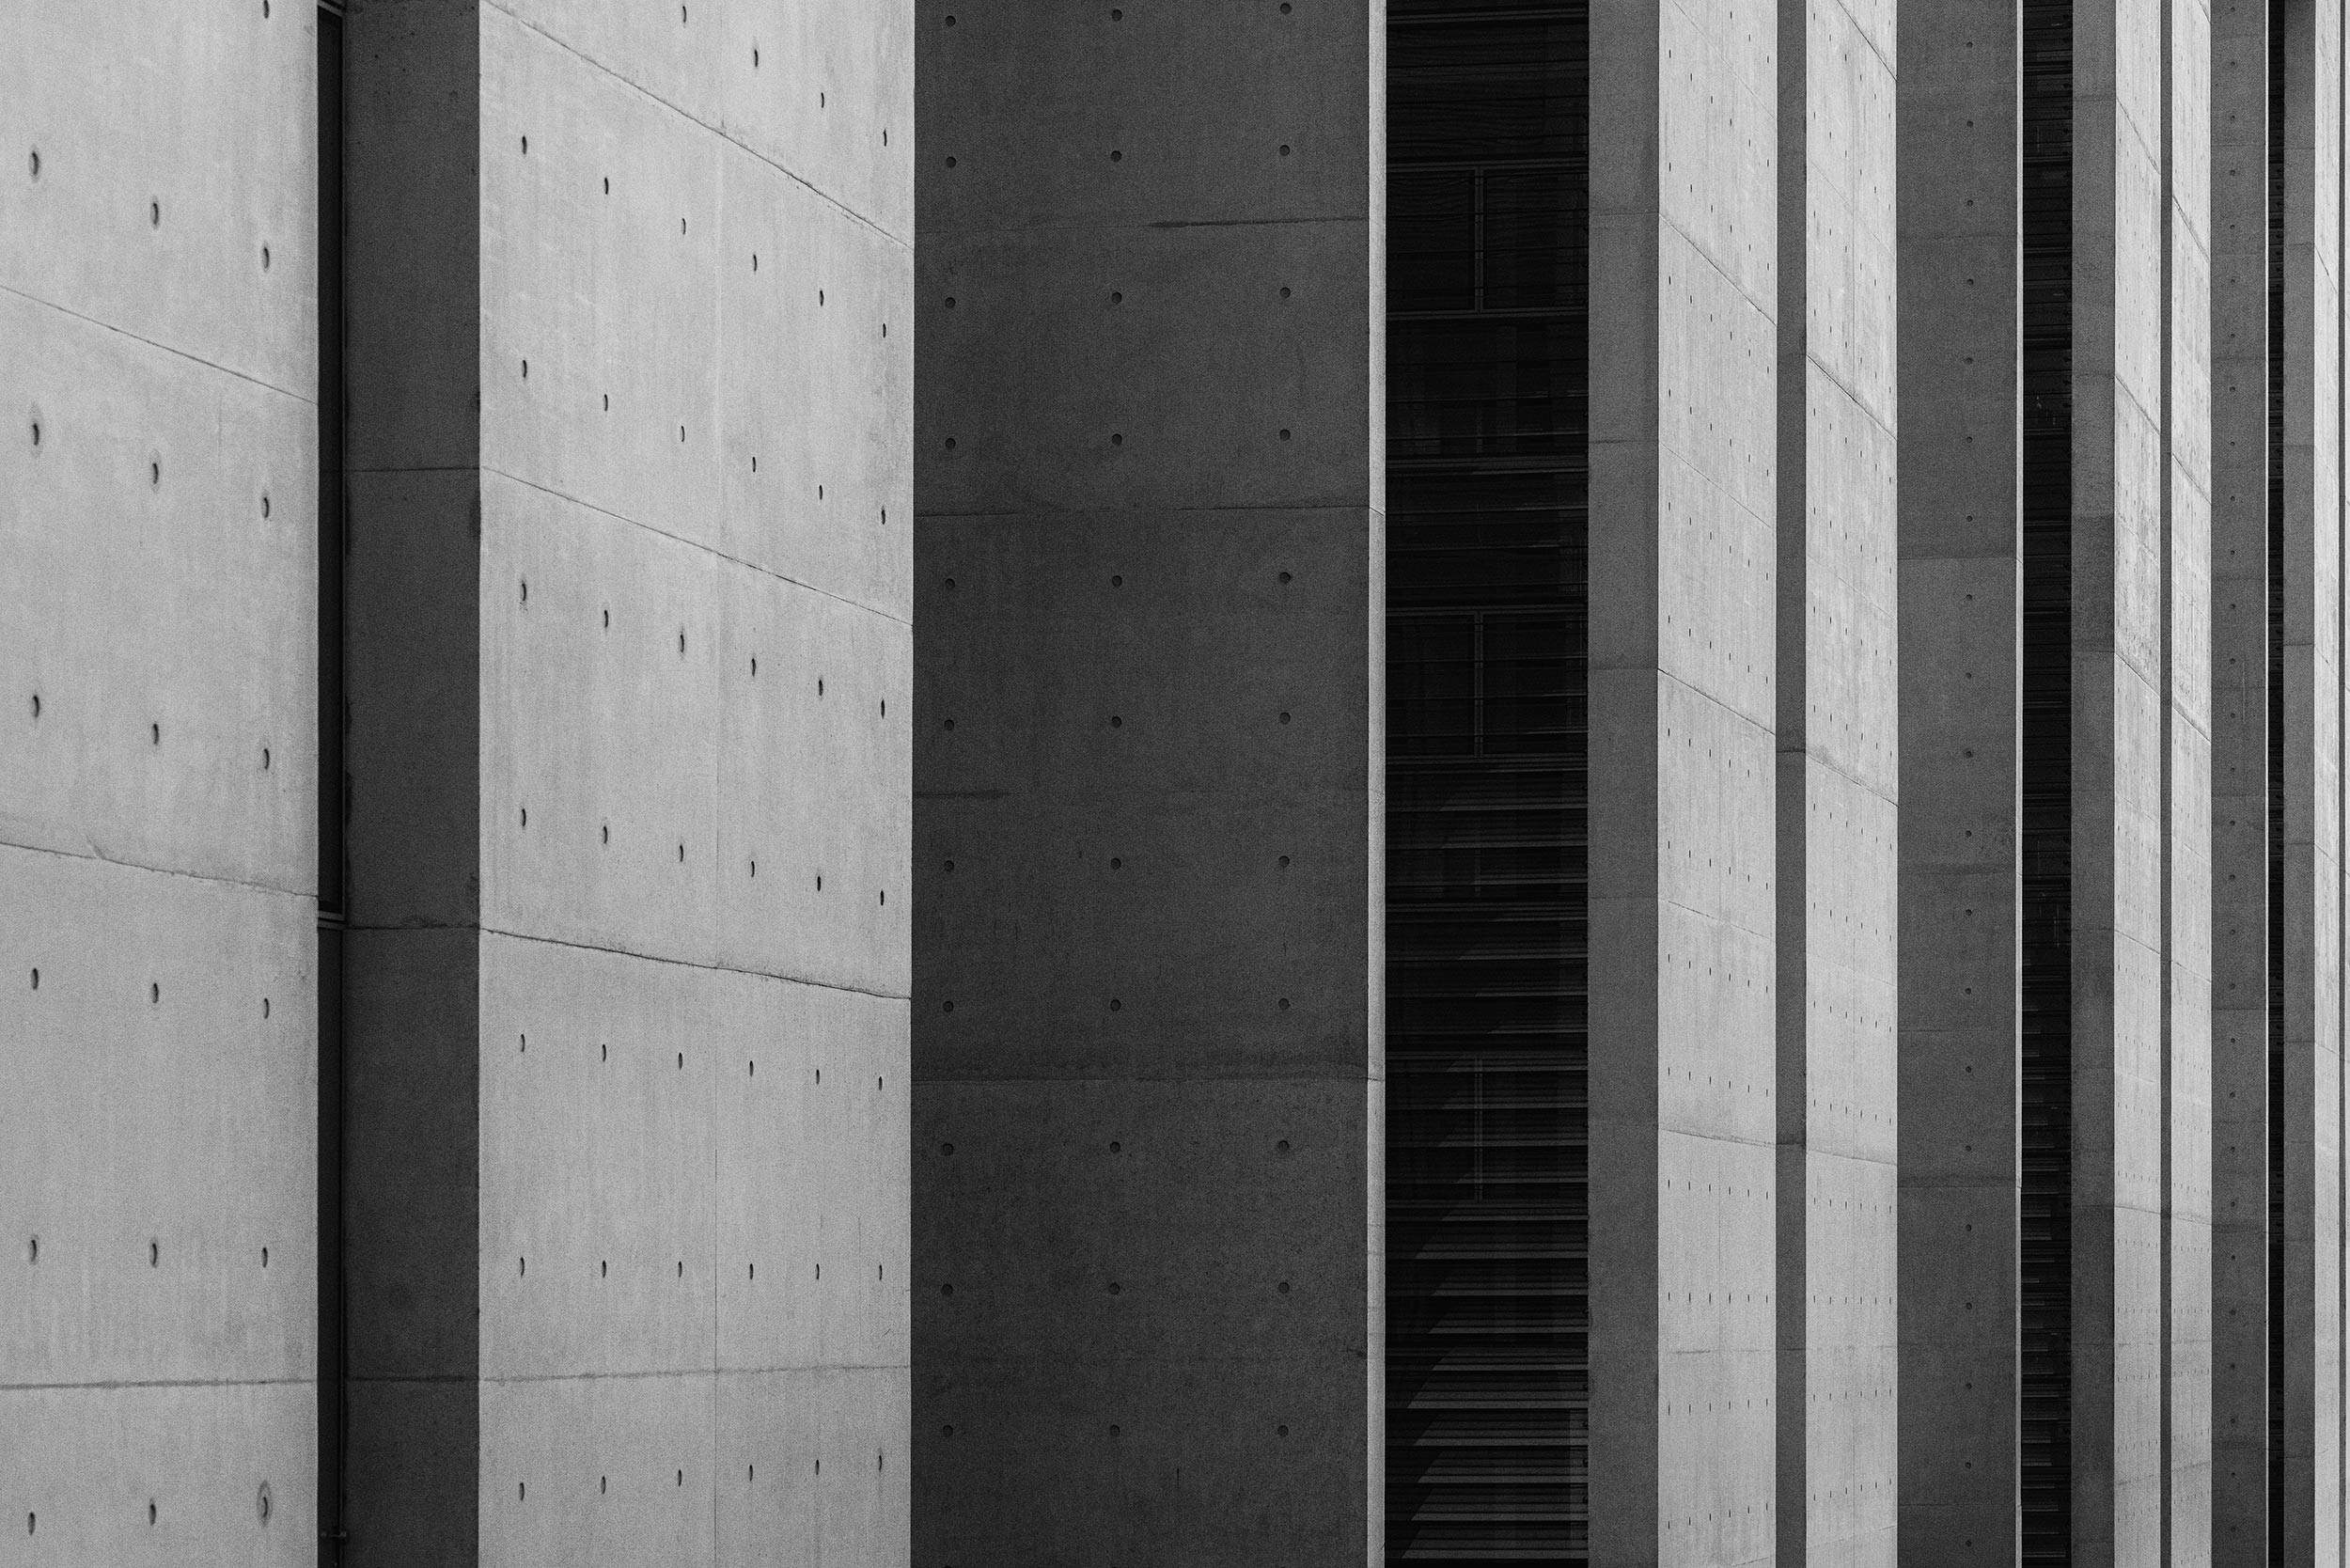 Paul-Loebe-Haus, Berlin, Architecture Photography, Black & White